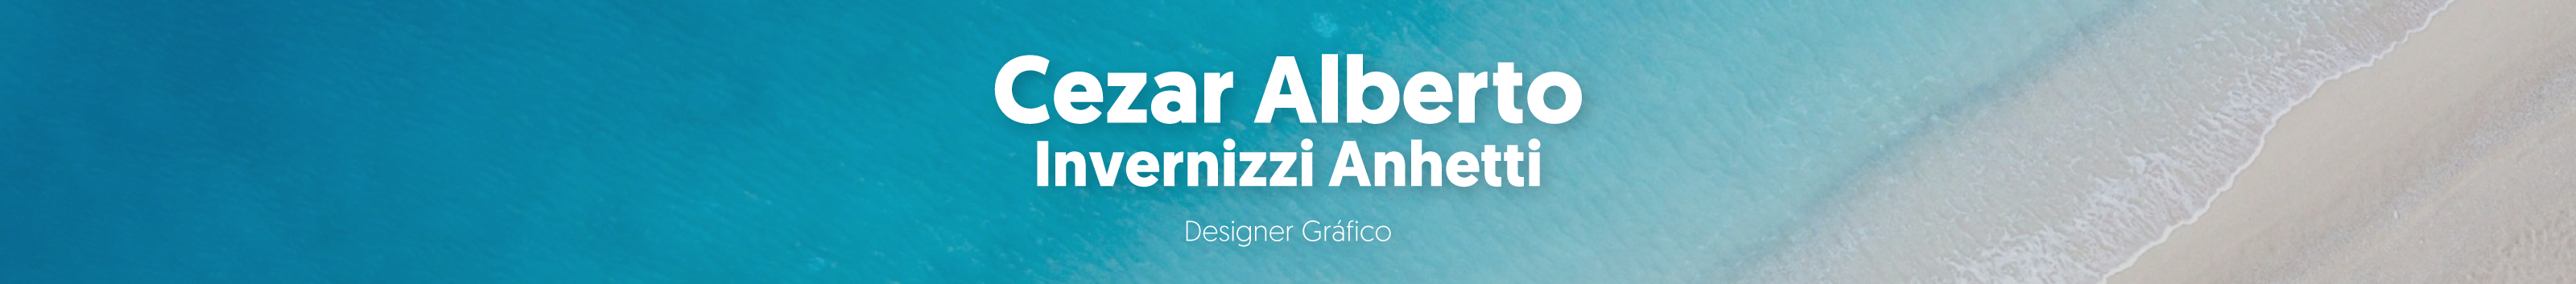 Banner profilu uživatele Cezar Alberto